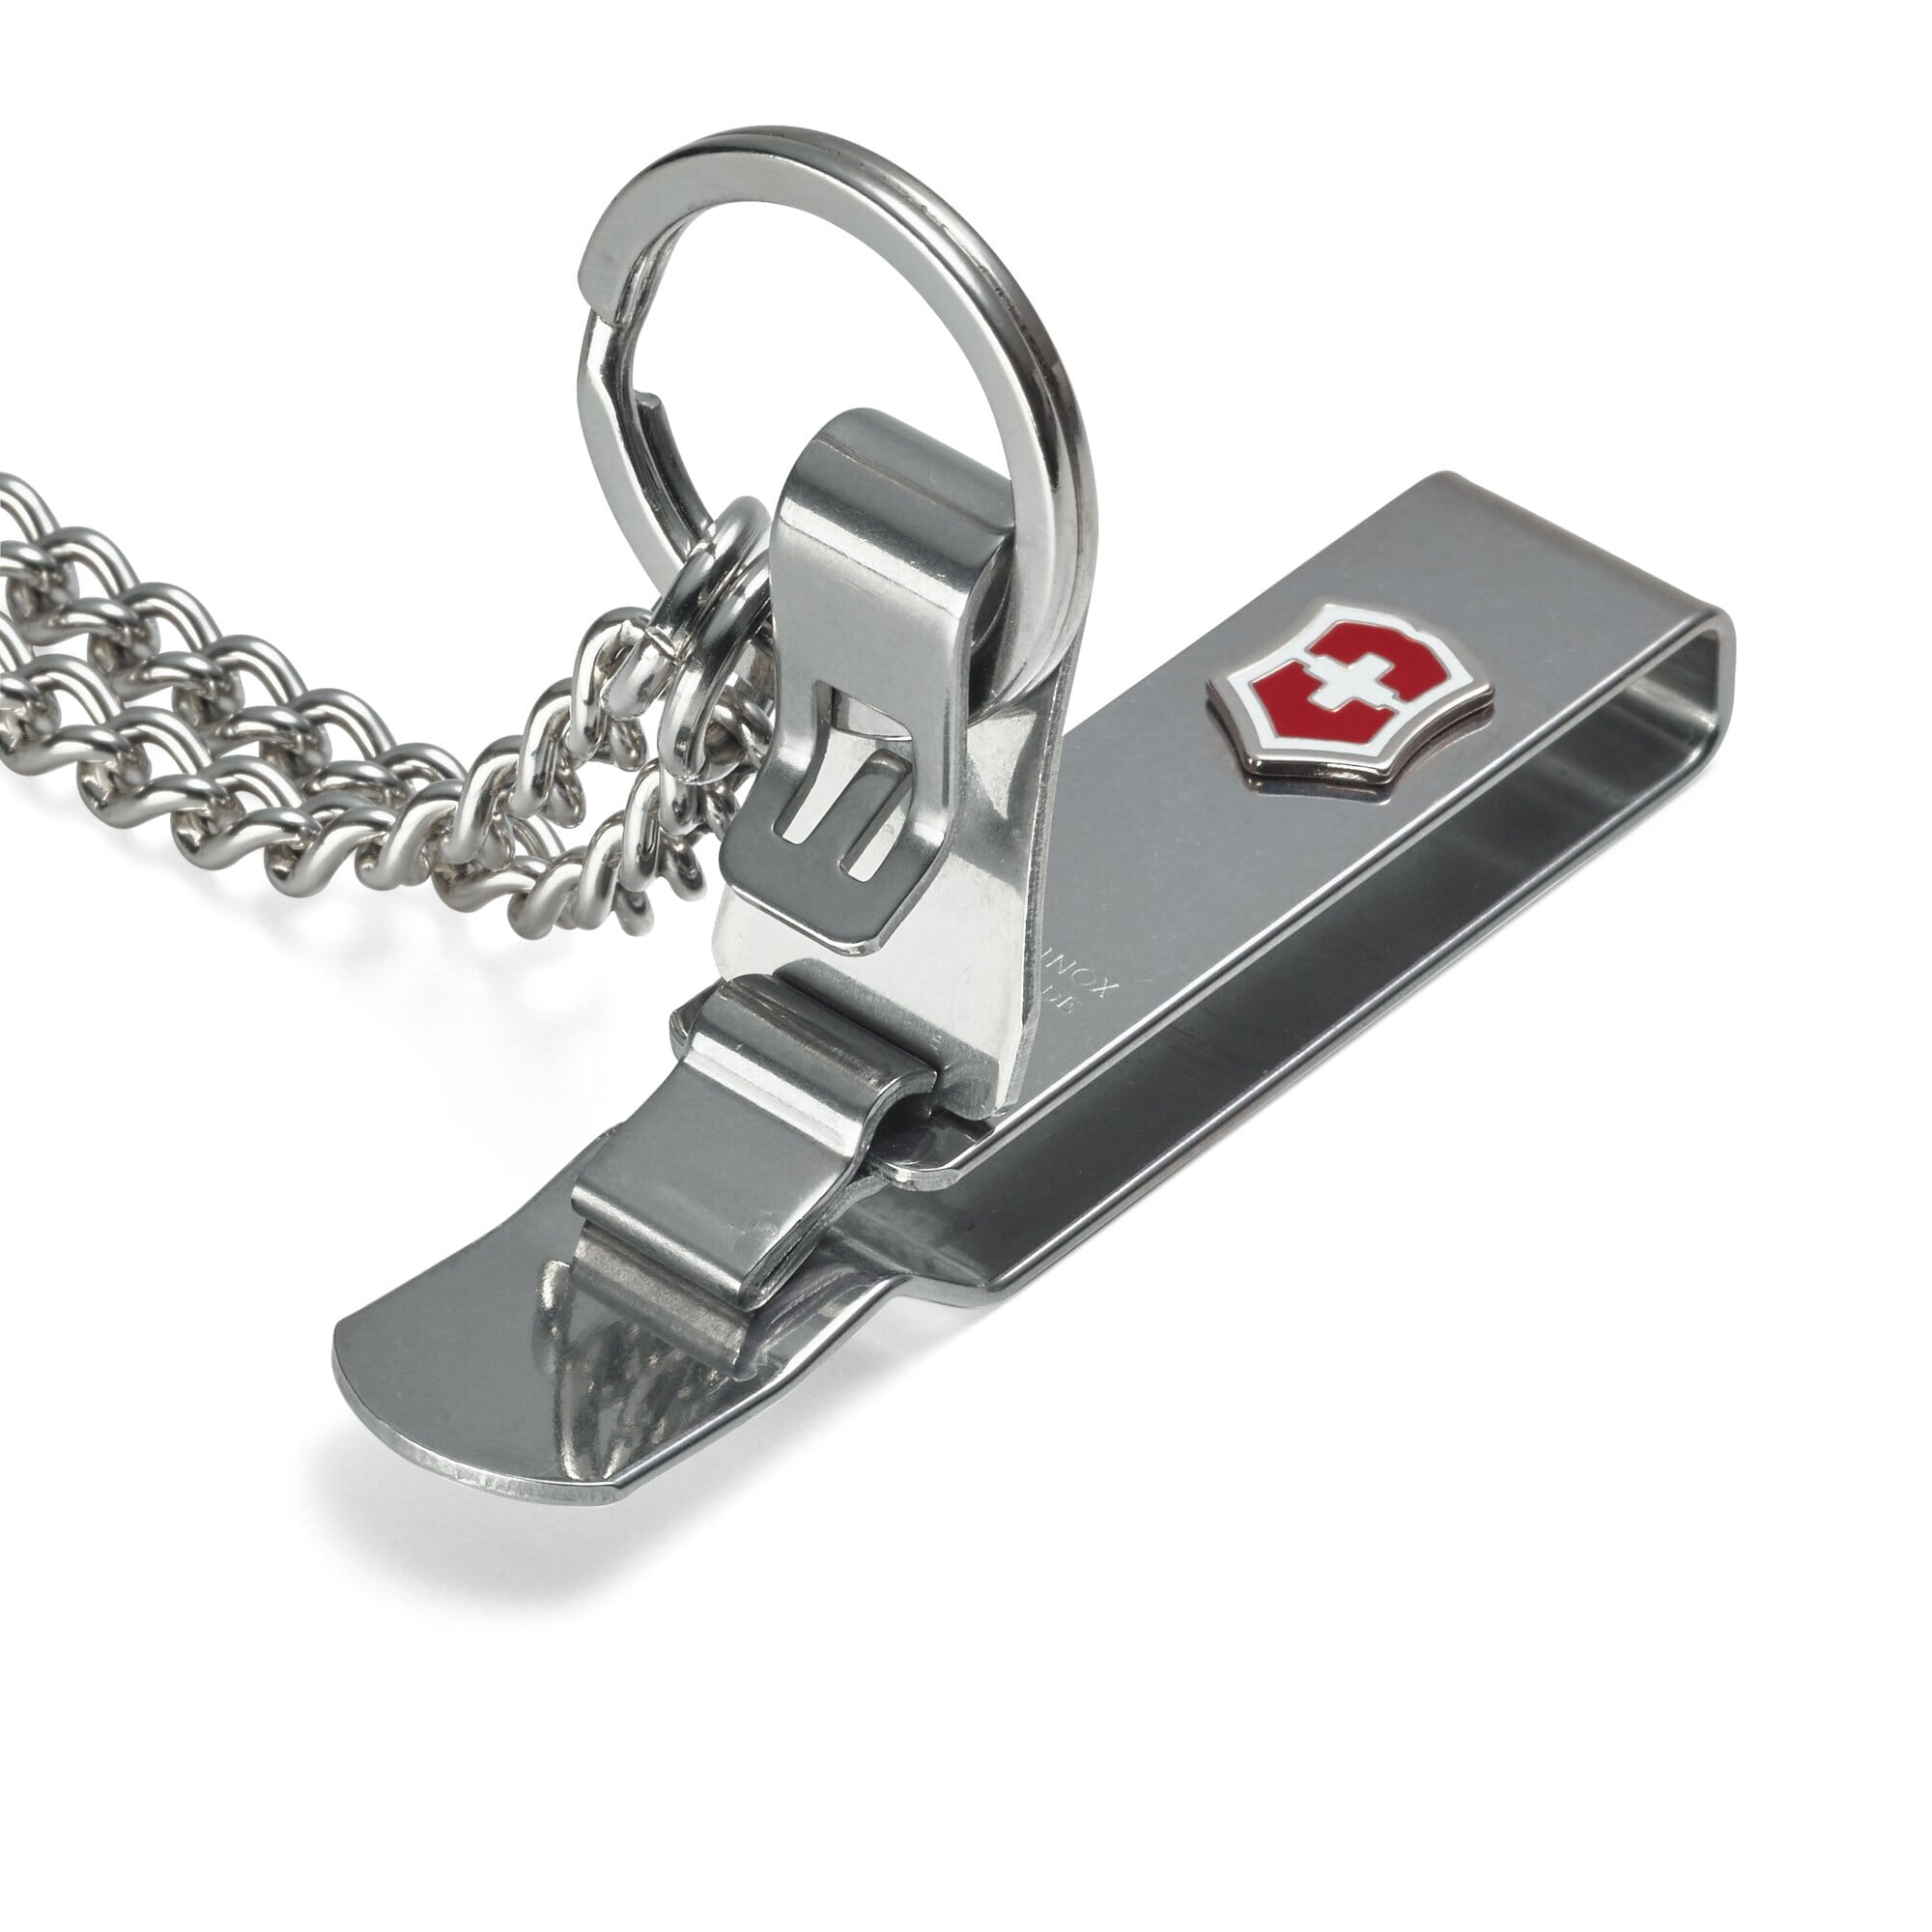 TEHAUX Pocket Watch Chain, Pocket Chain Belt Clip Keys Chain